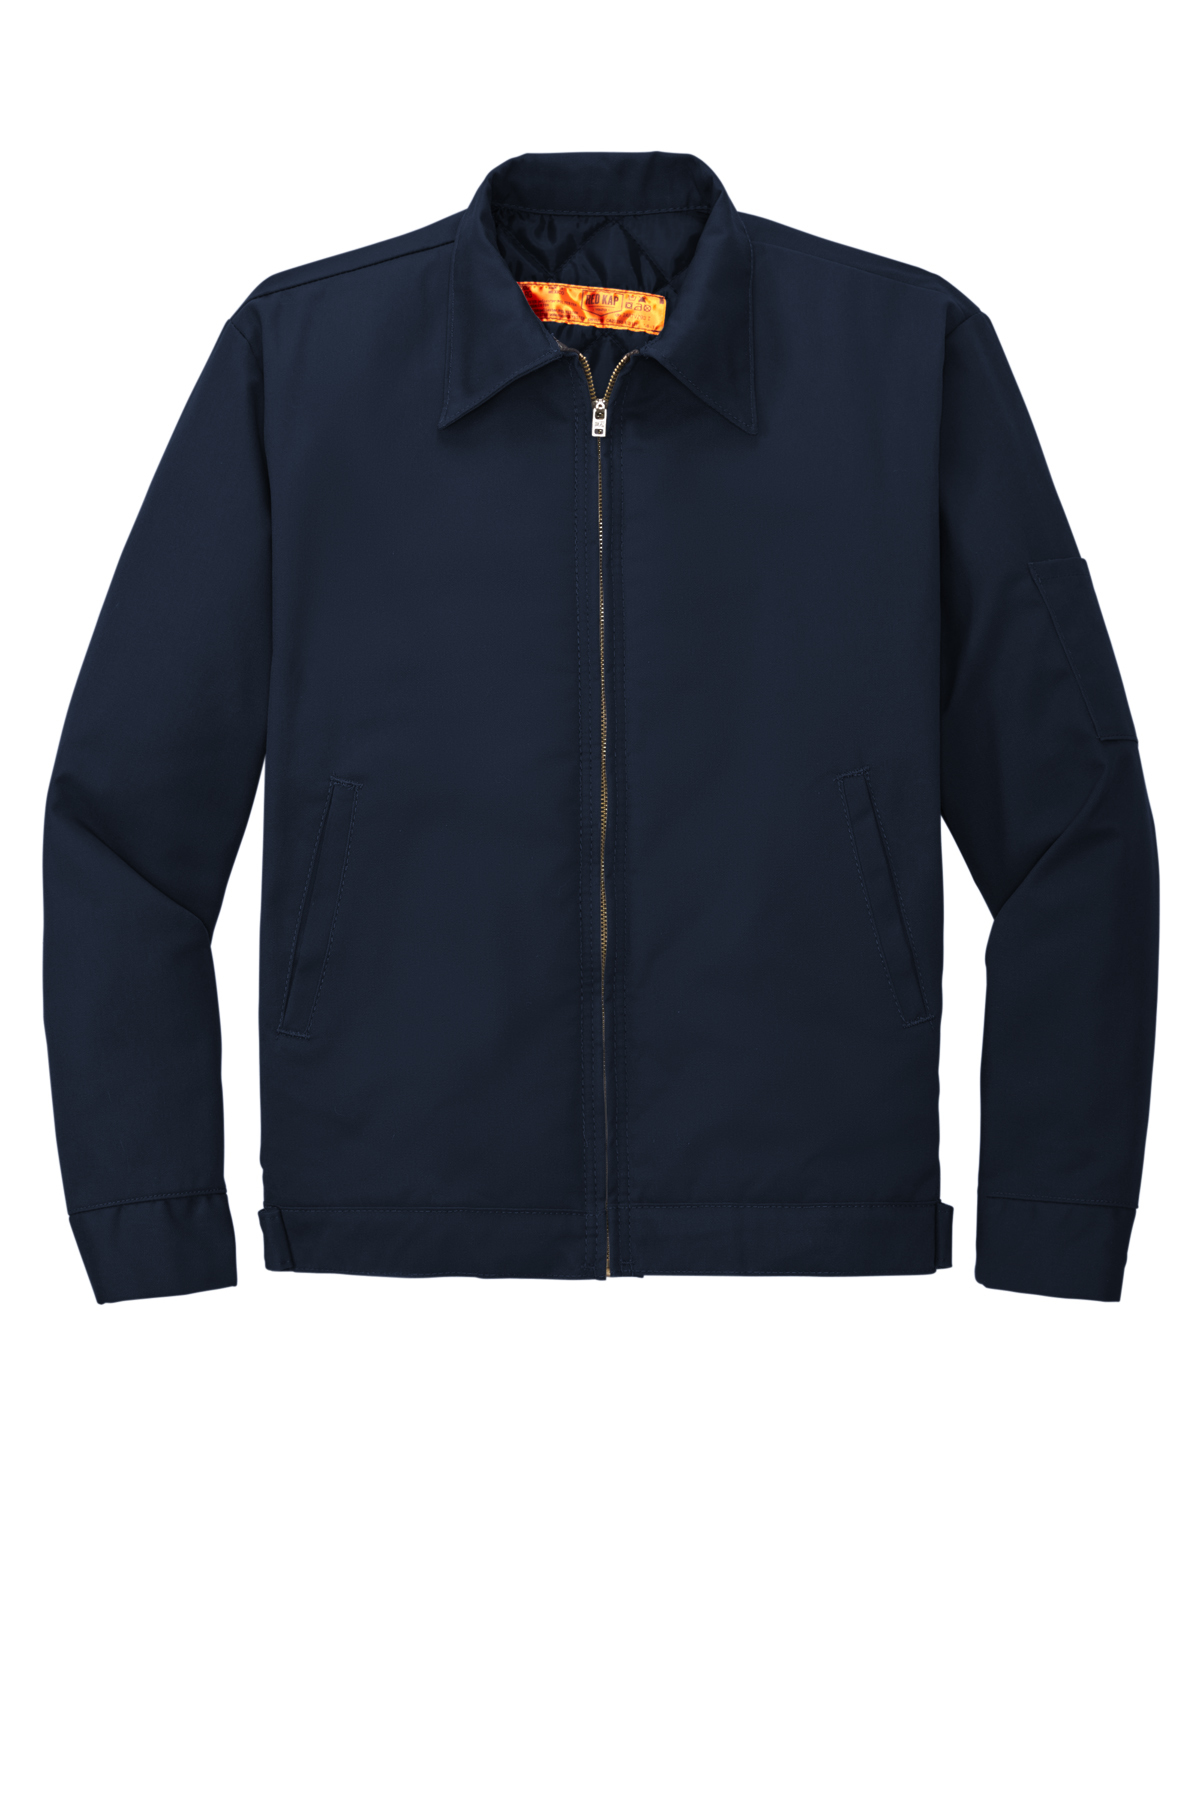 Red Kap Slash Pocket Jacket | Product | Company Casuals